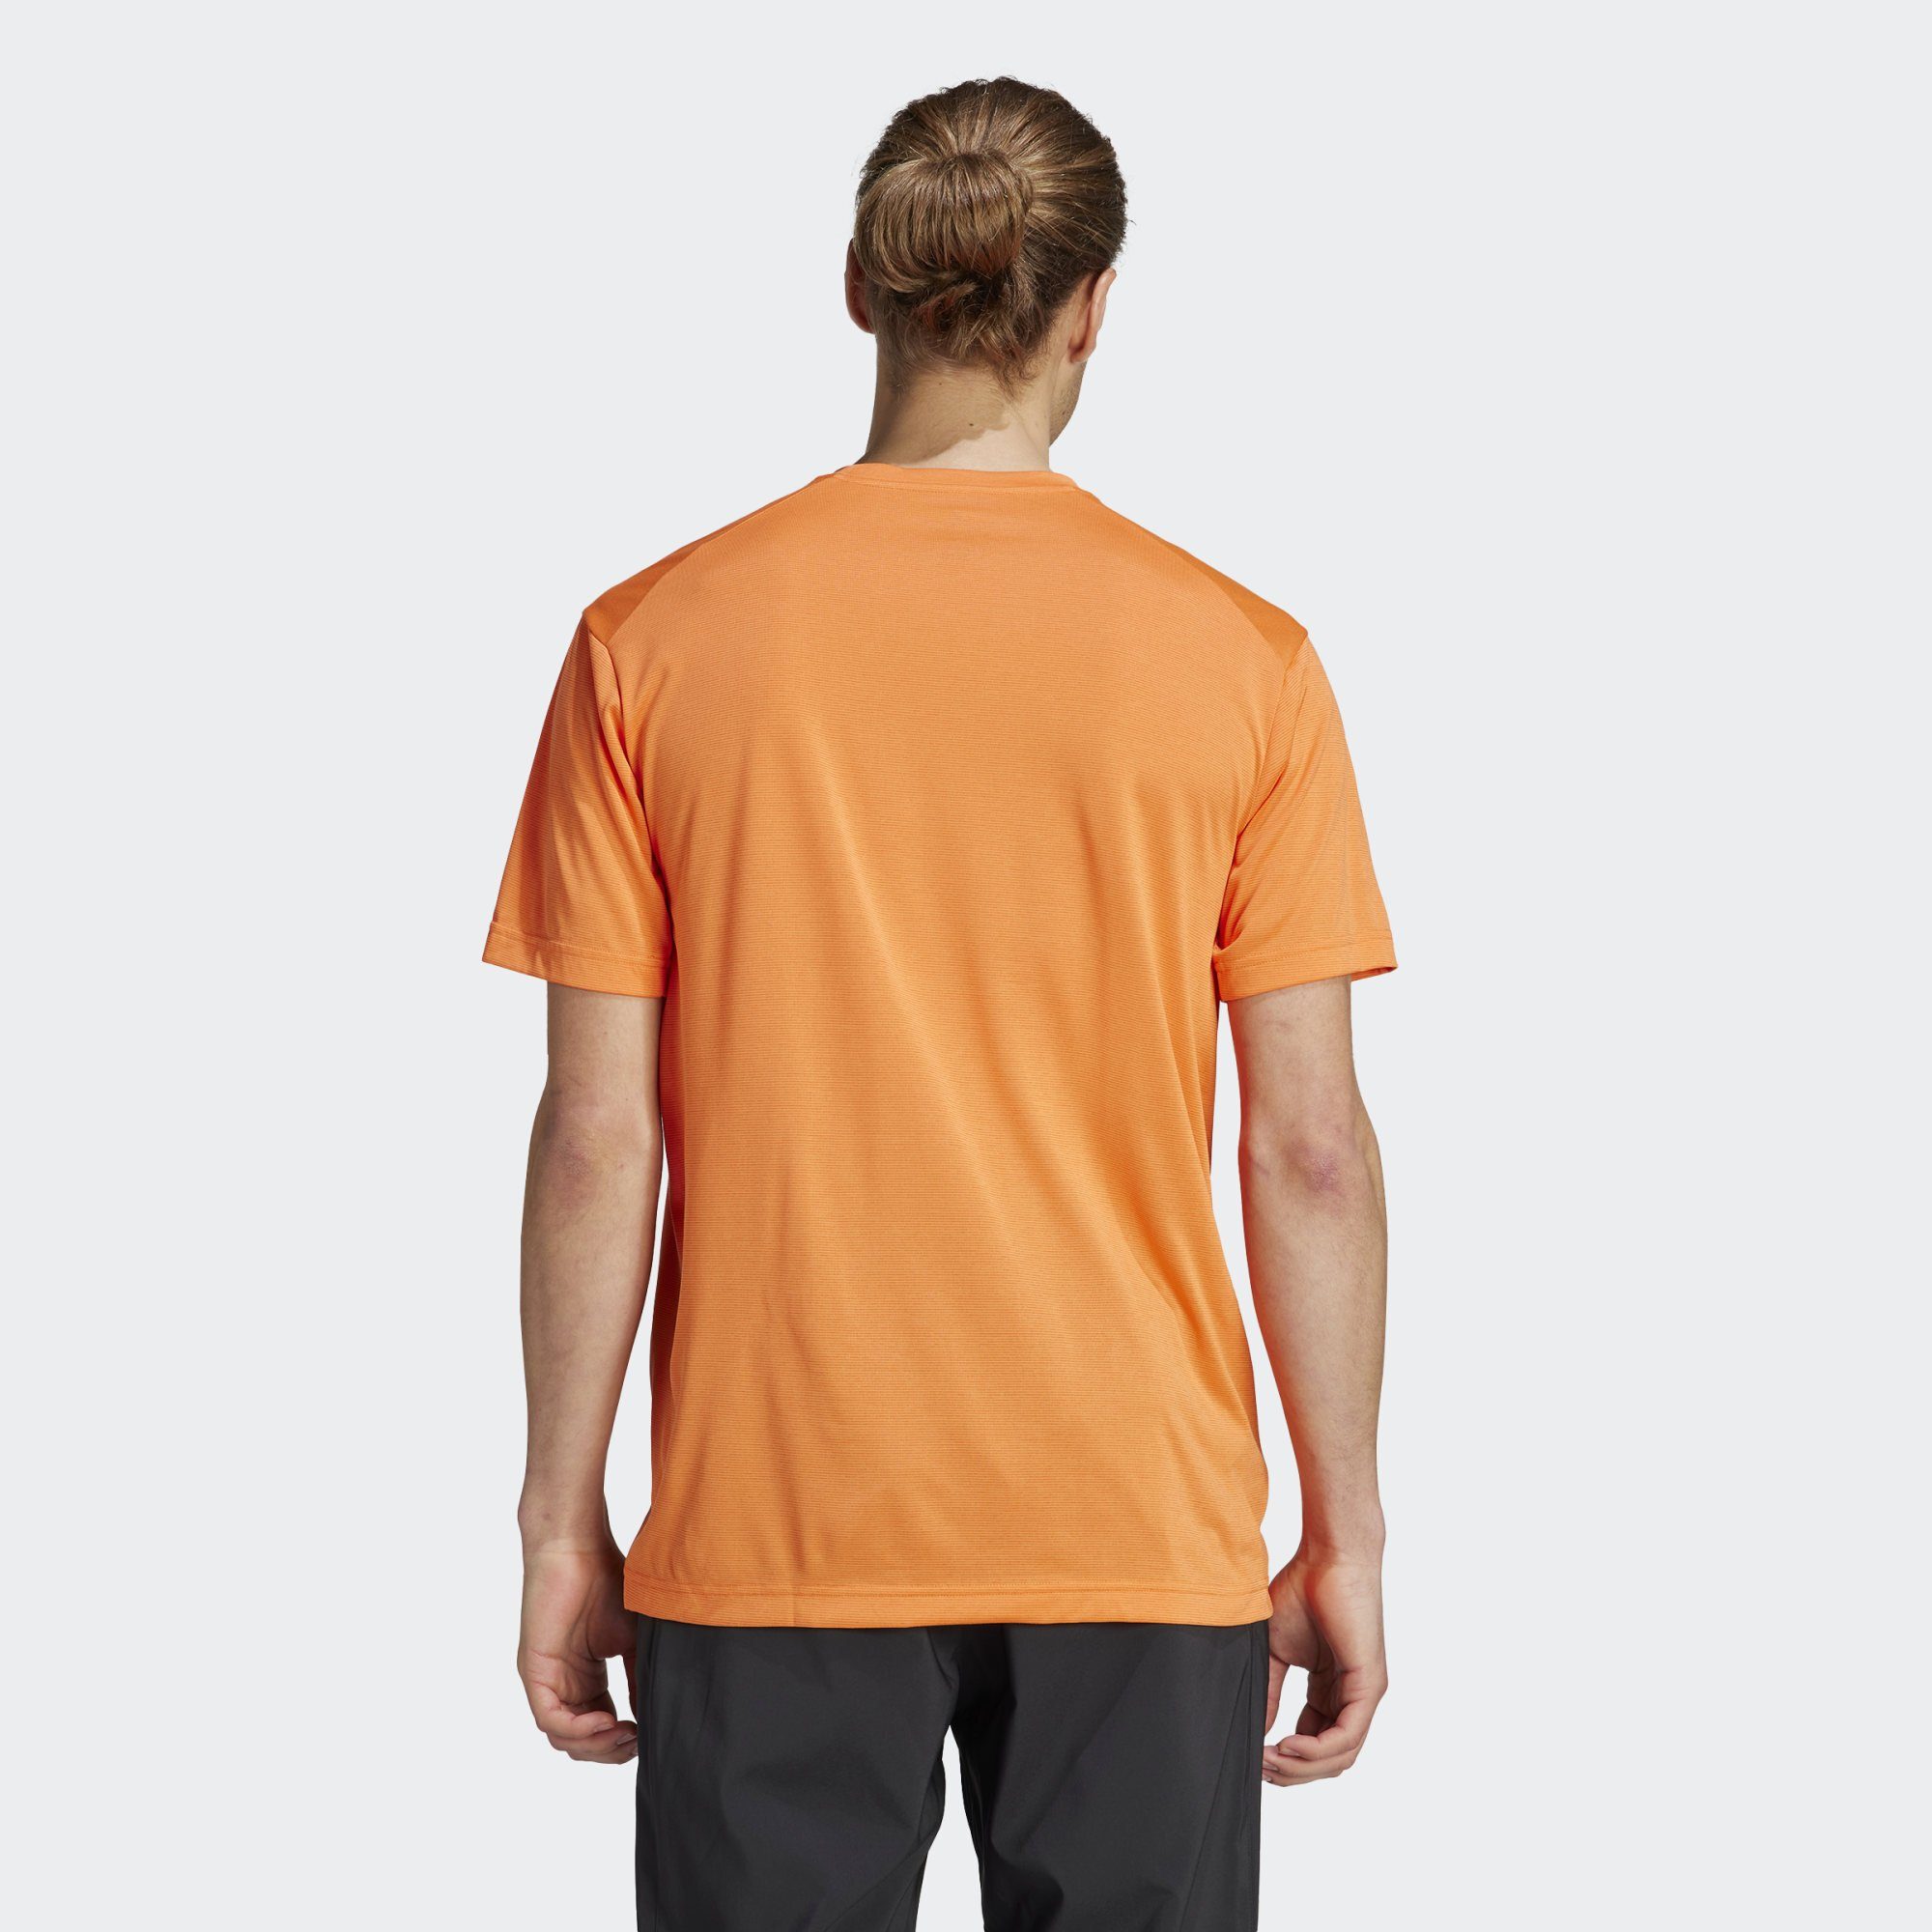 TERREX adidas T-SHIRT Semi MULTI TERREX Orange Impact Funktionsshirt